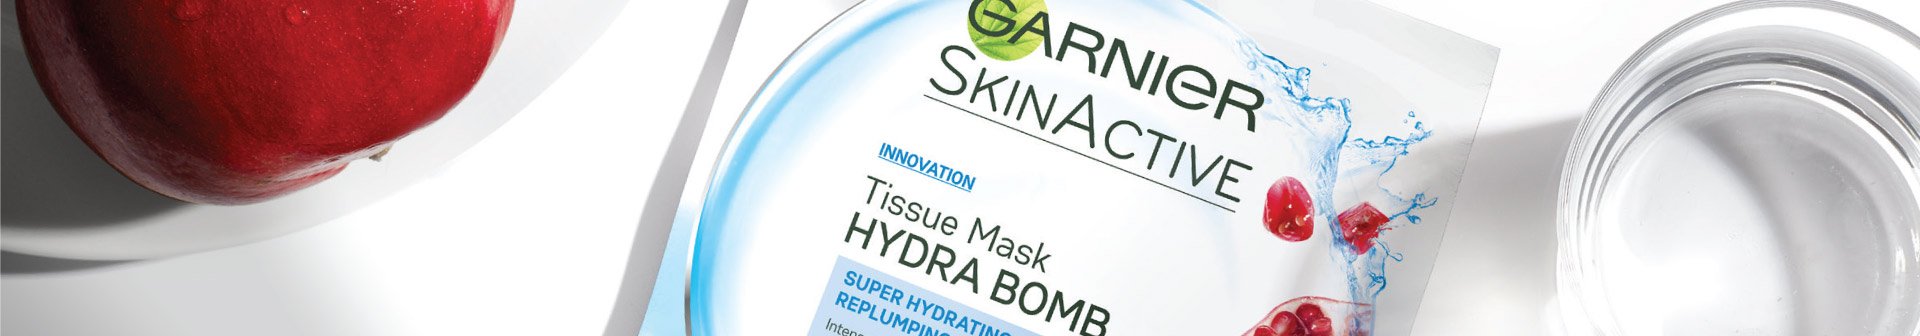 Hydra bomb tissue mask